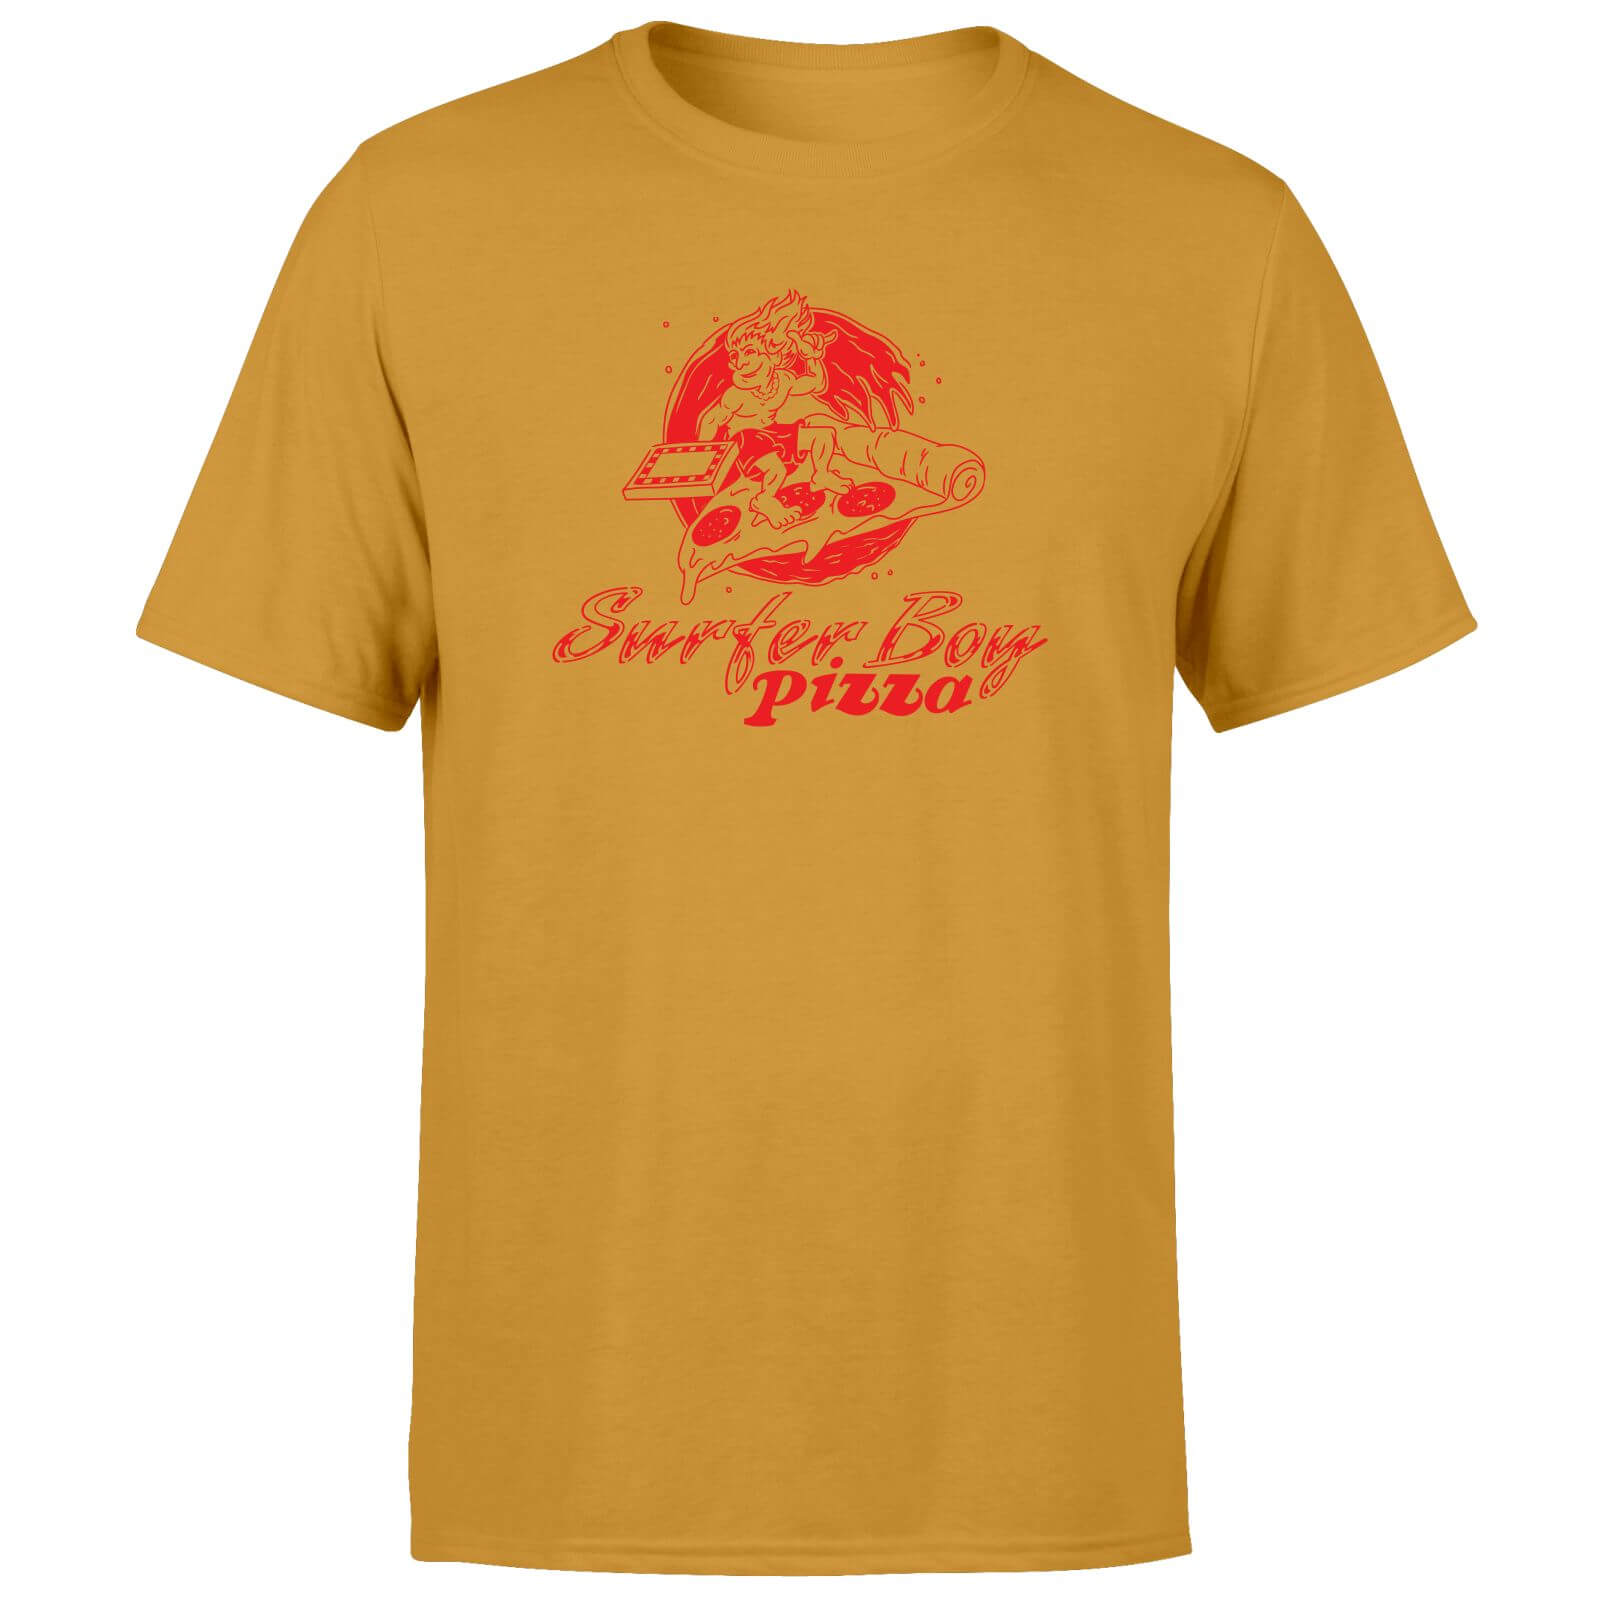 Stranger Things Surfer Boy Pizza Unisex T-shirt - Mosterd - XL - Mustard